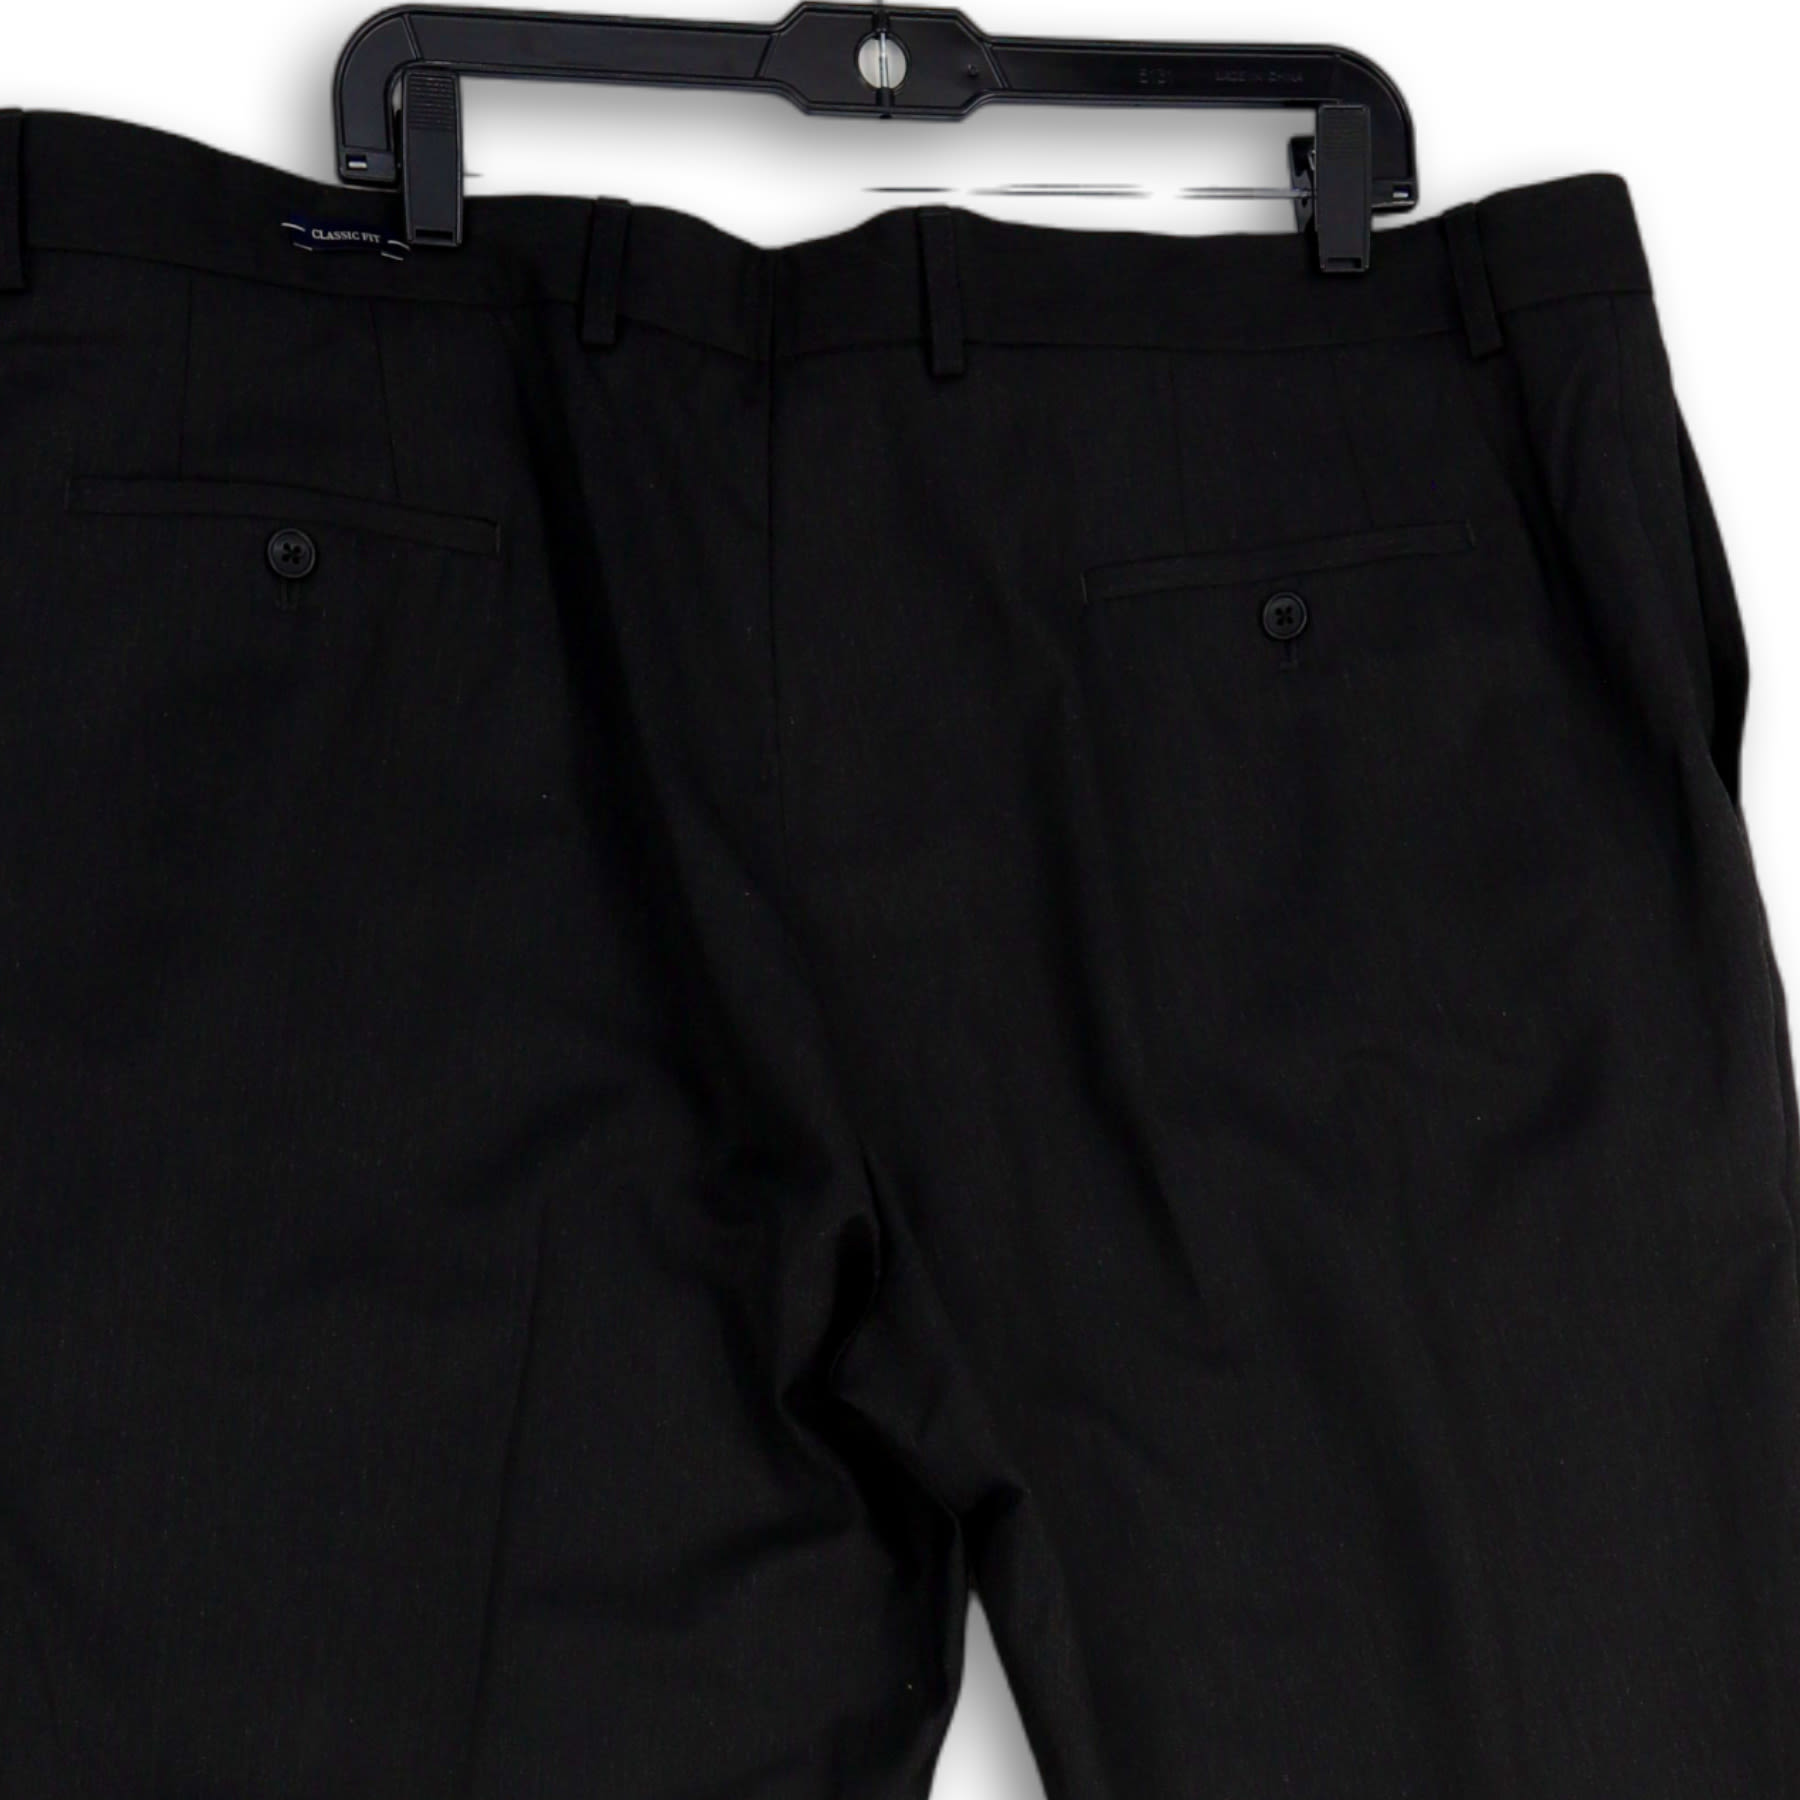 Buy the NWT Mens Black Flat Front Slash Pocket Straight Leg Dress Pants Size  44x34